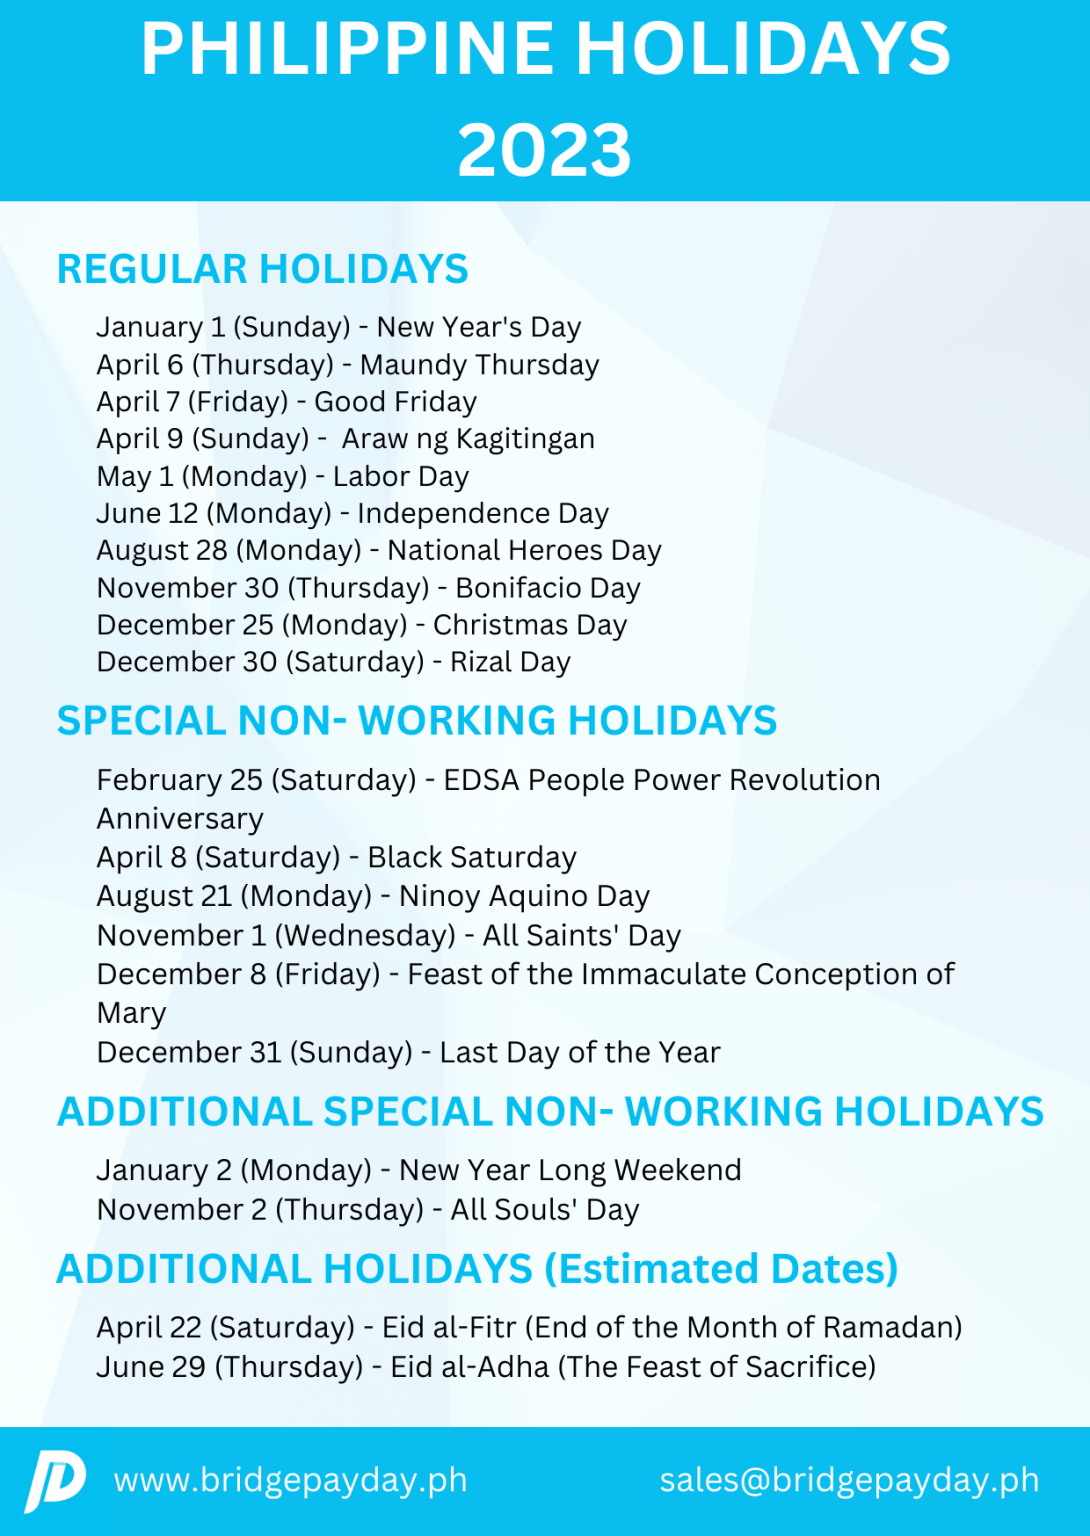 PayDay Philippine Holidays 2023